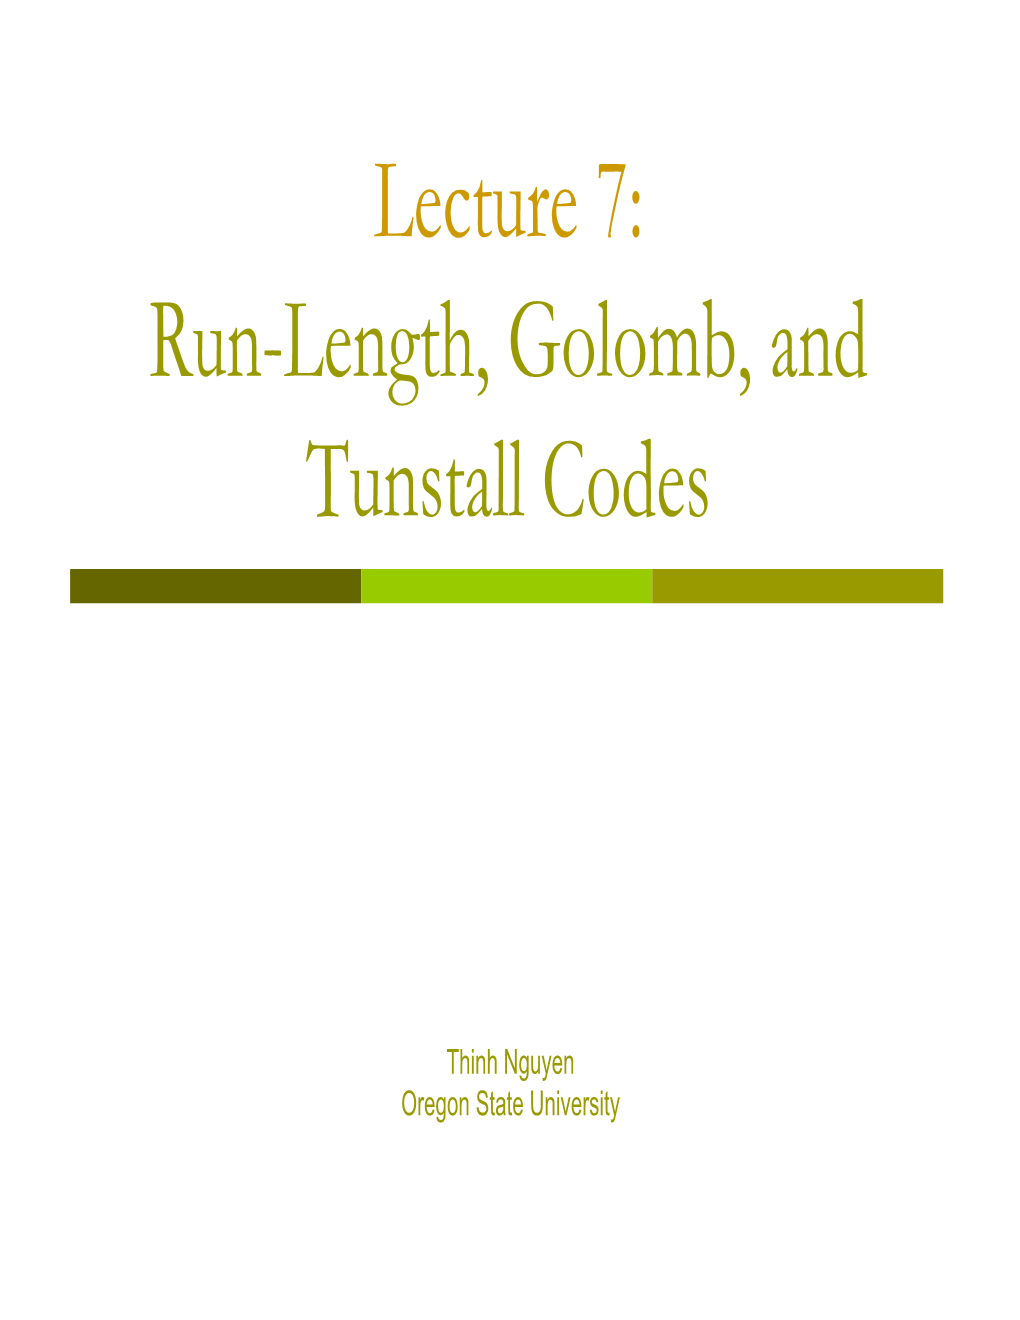 Run-Length, Golomb, and Tunstall Codes